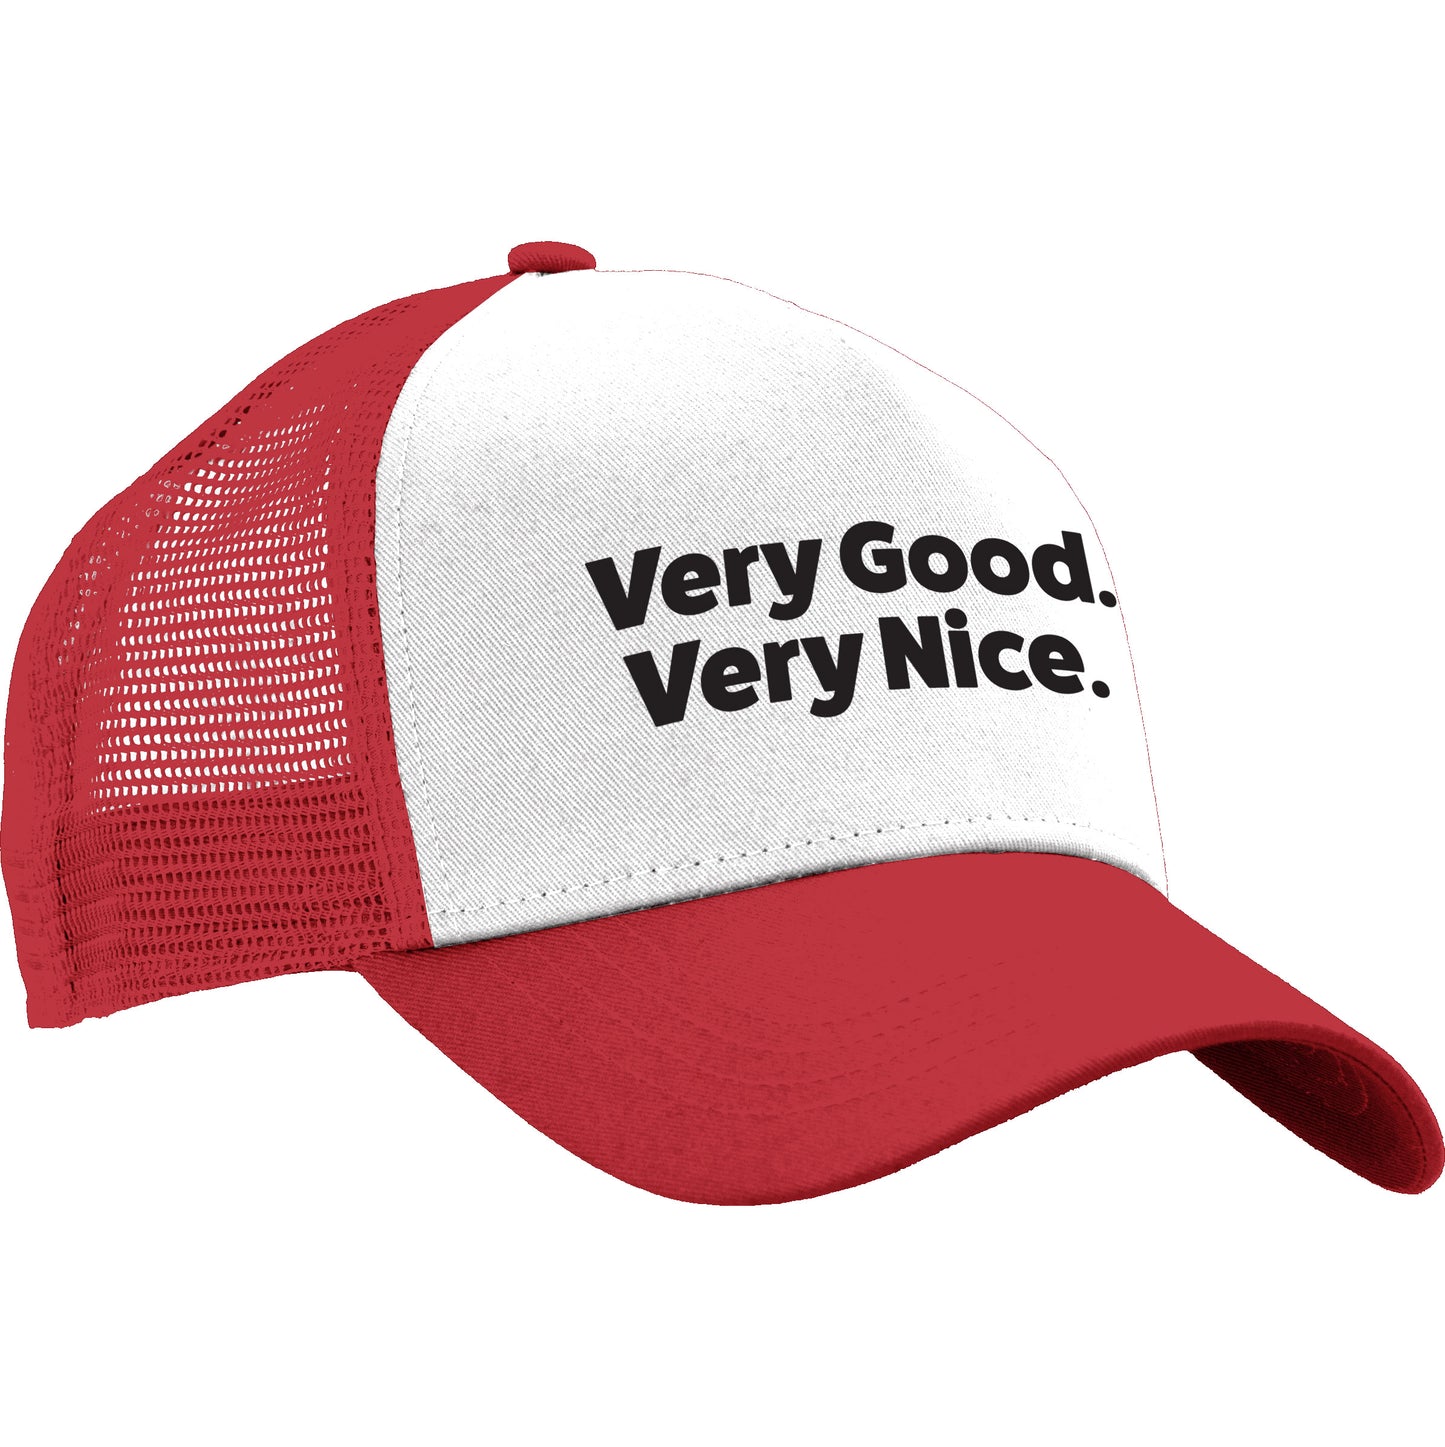 Very Good Very Nice - Caps